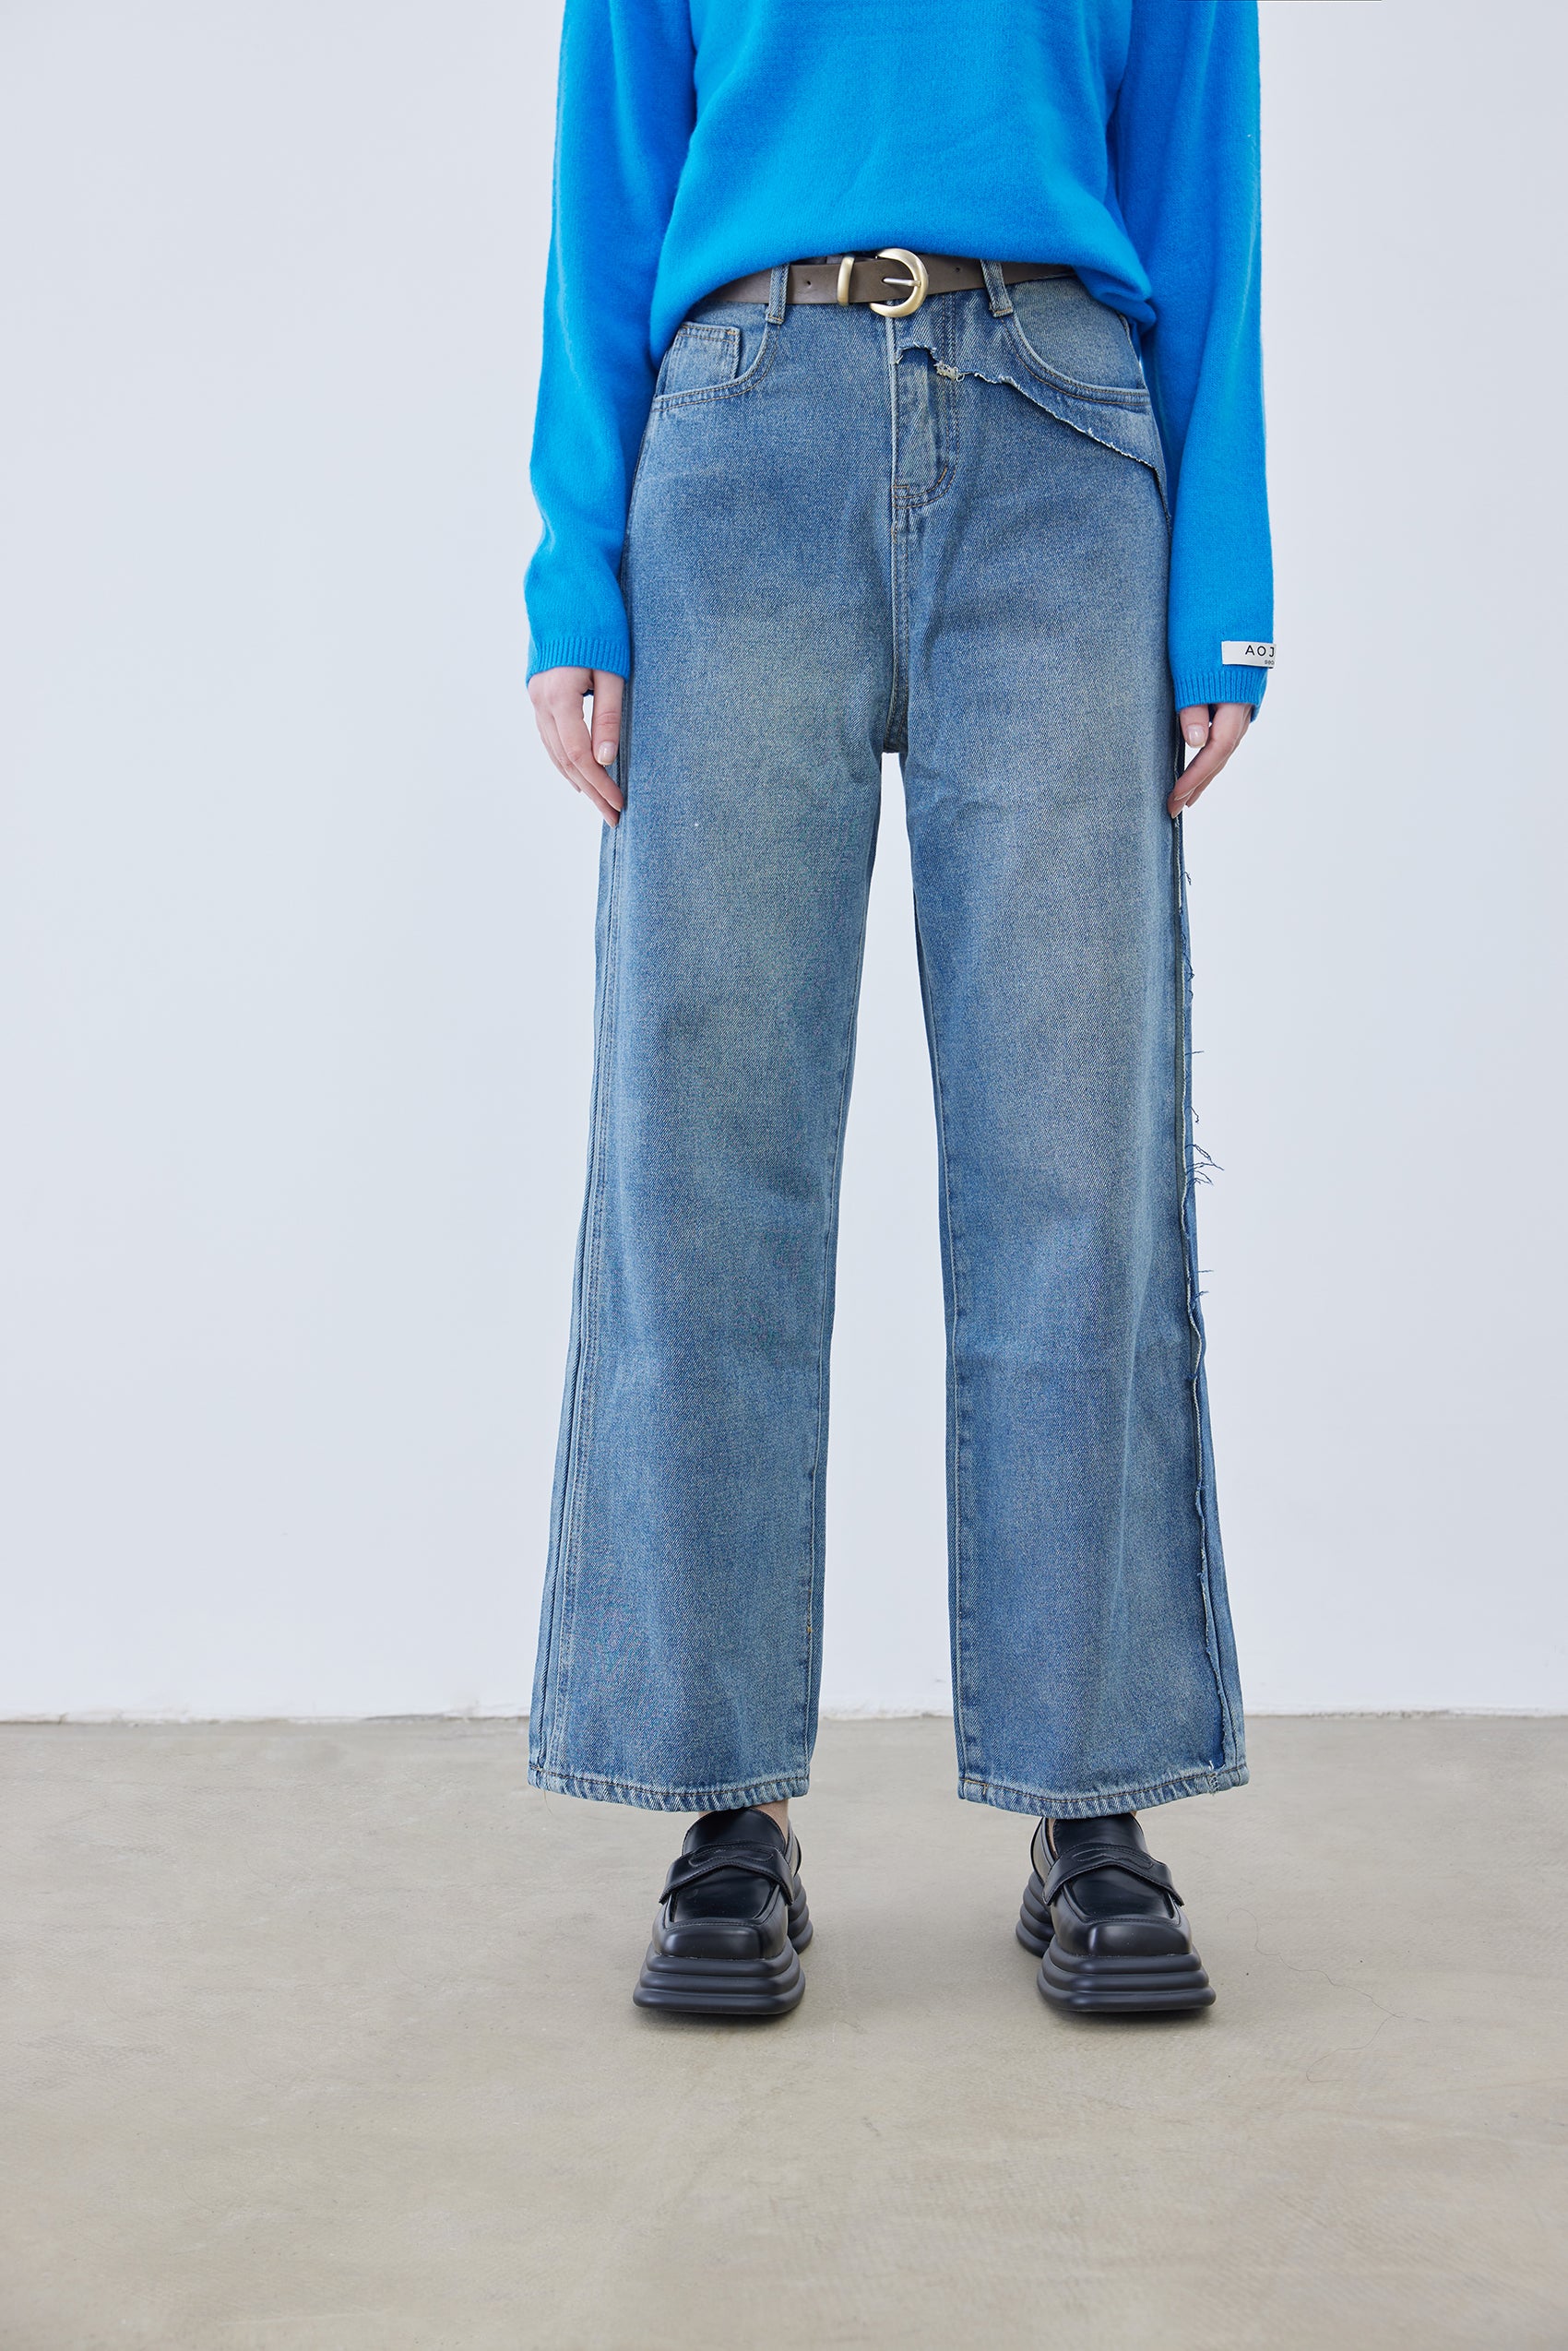 Asymmetrical distressed jeans